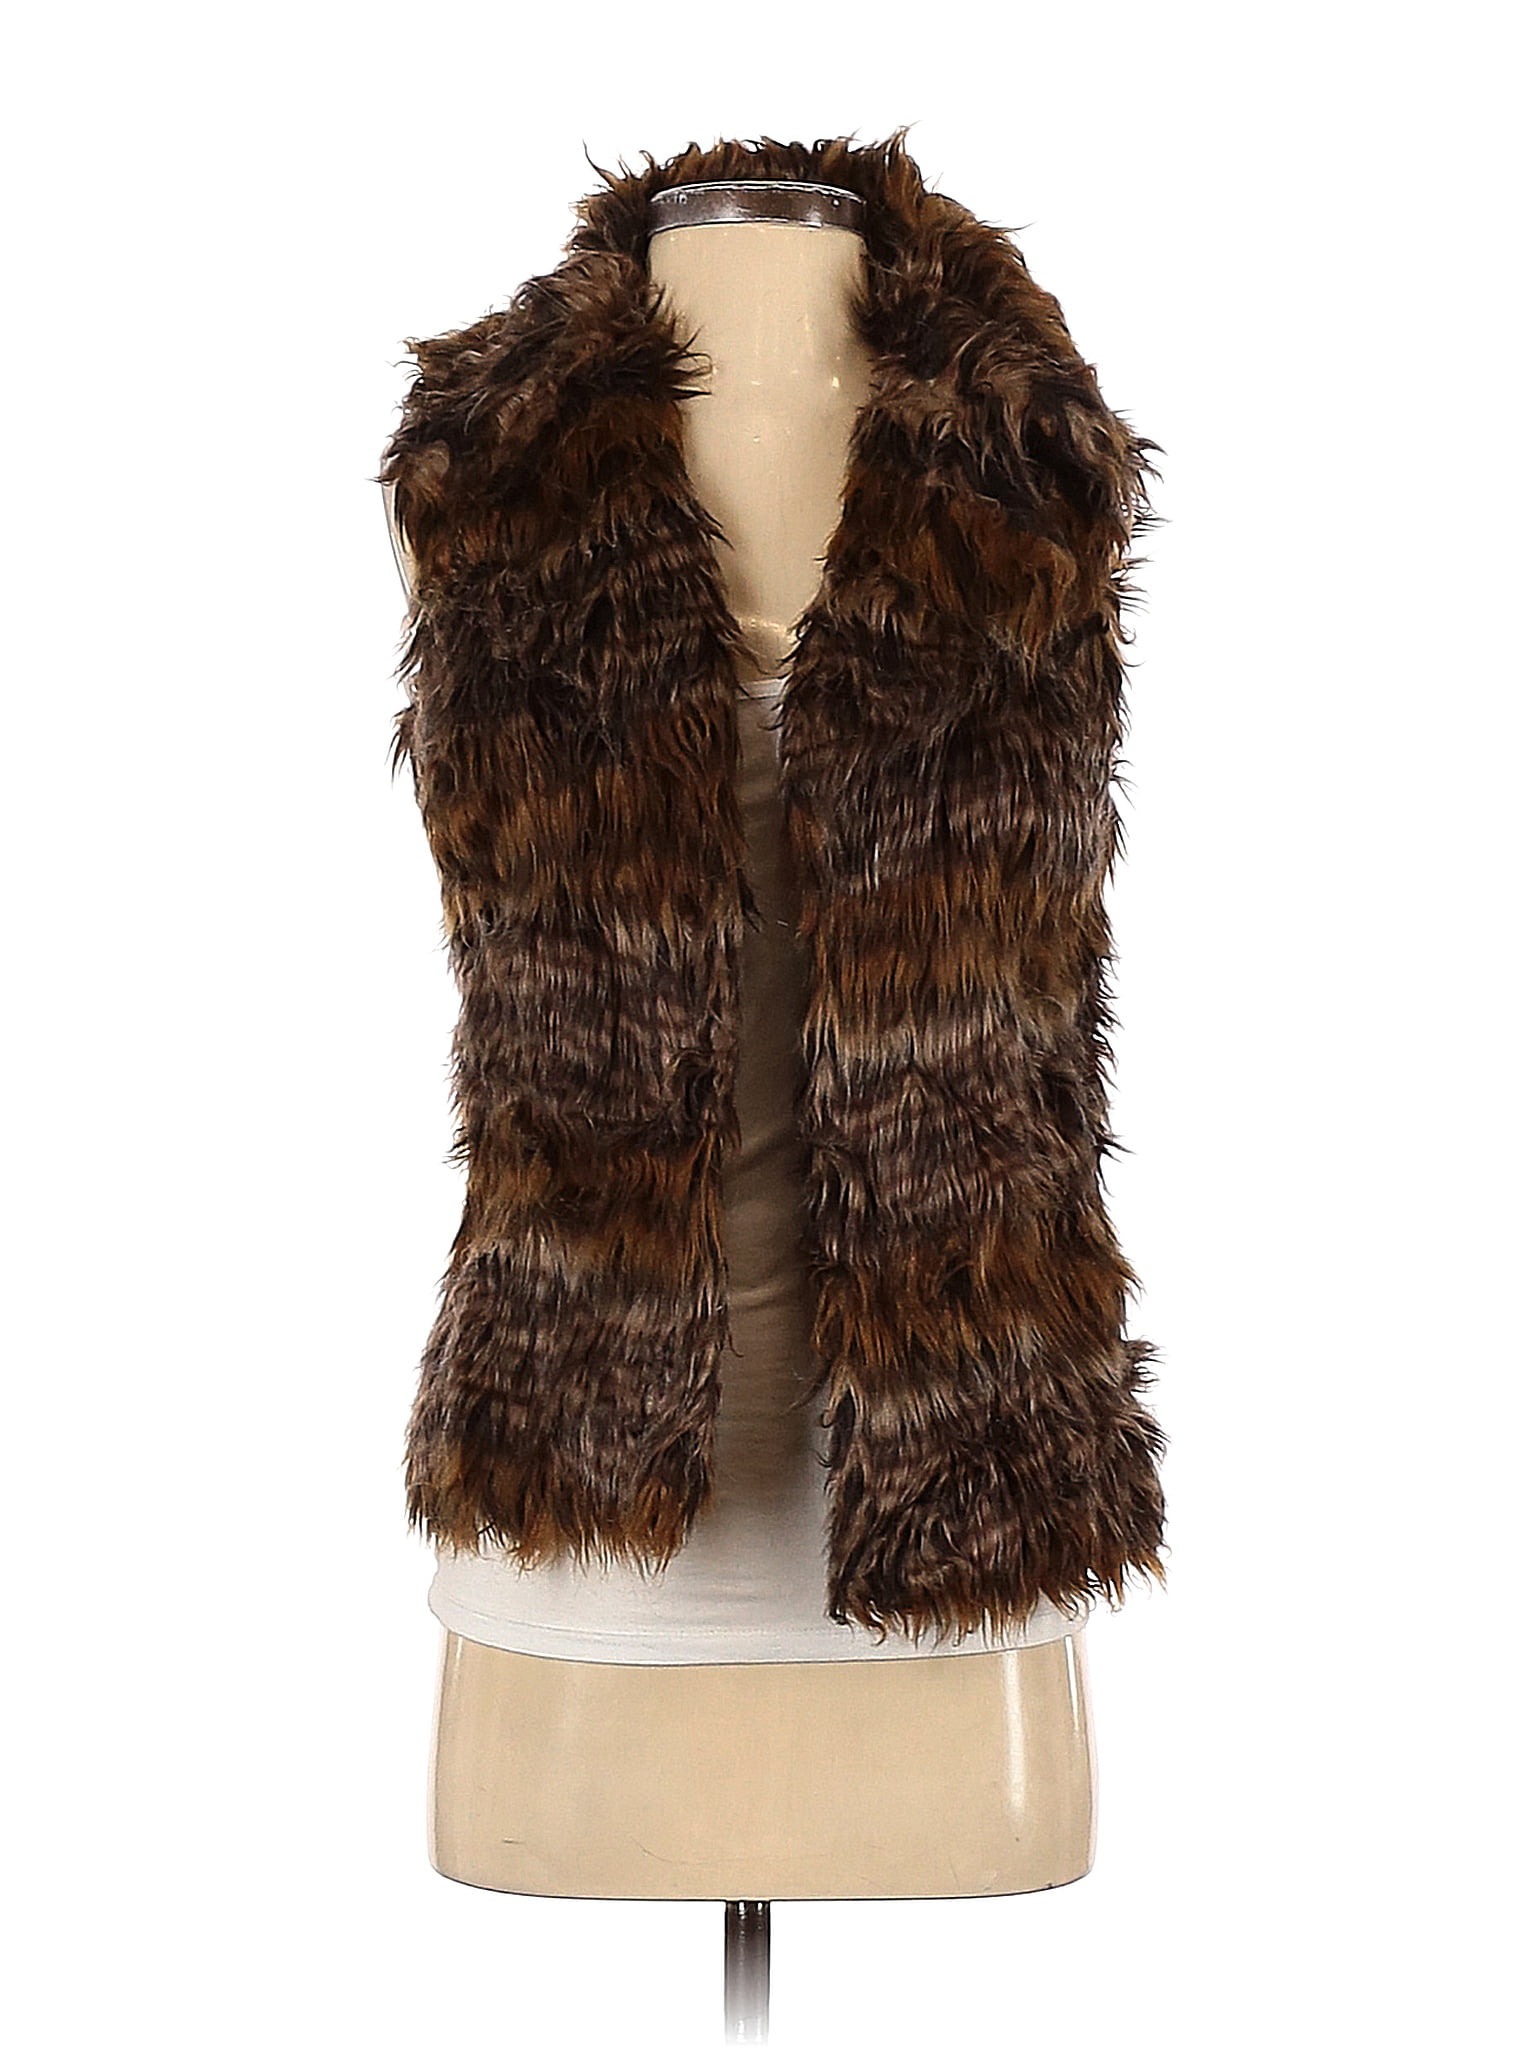 Pre-Owned Antonio Melani Women's Size XS Faux Fur Jacket - Walmart.com